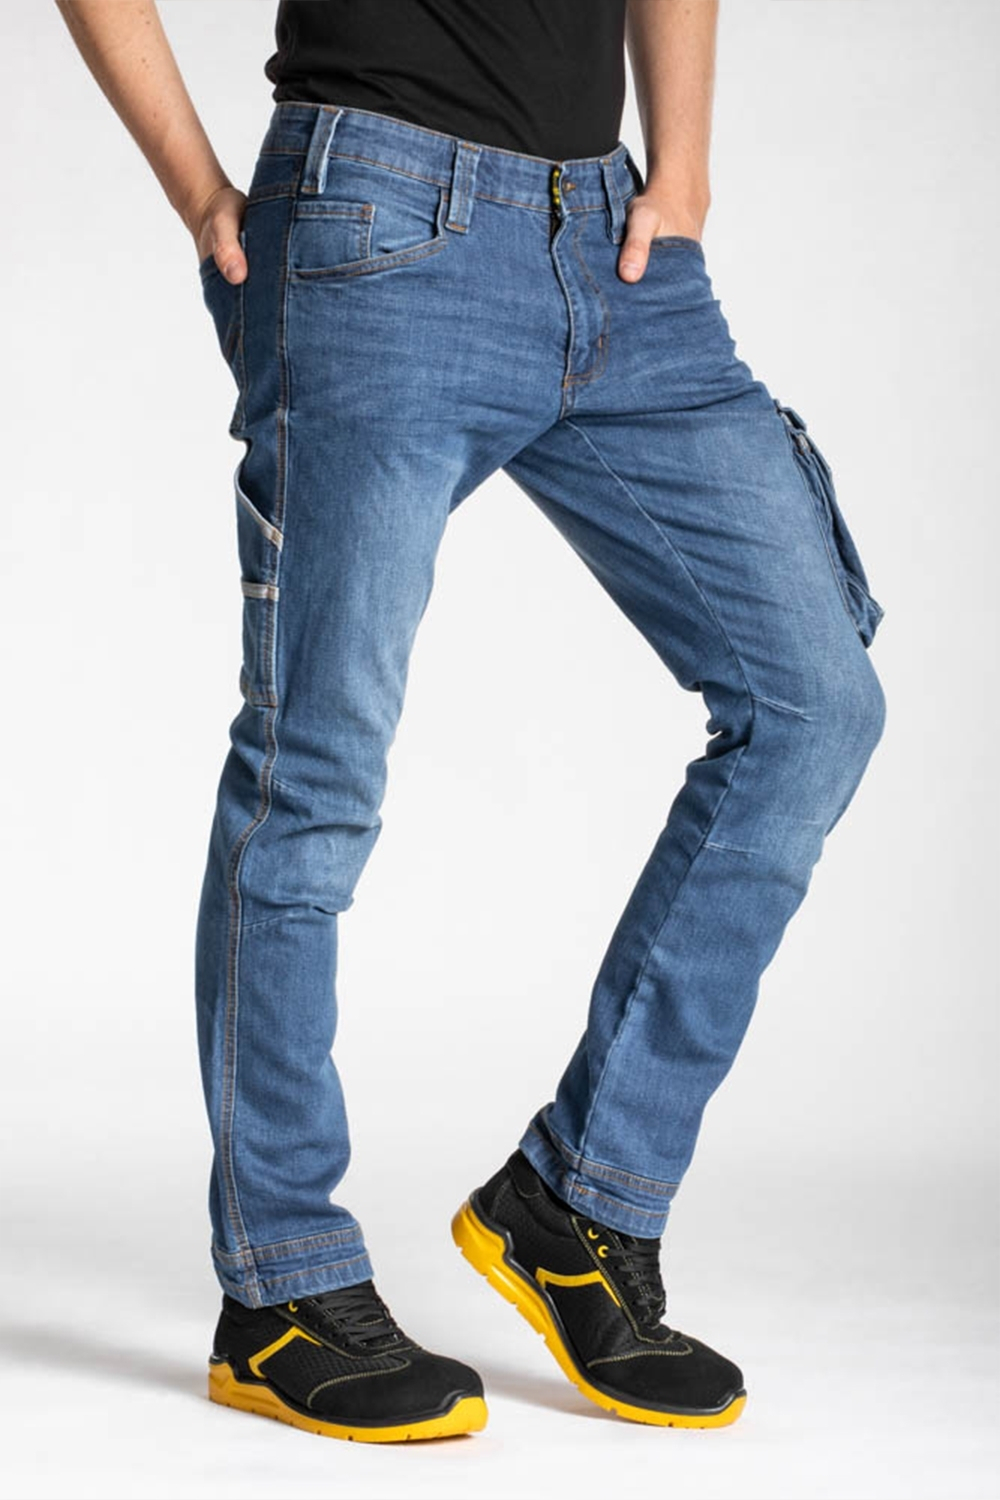 Rica Lewis Kalhoty do pasu RICA LEWIS JOB jeans vel.54